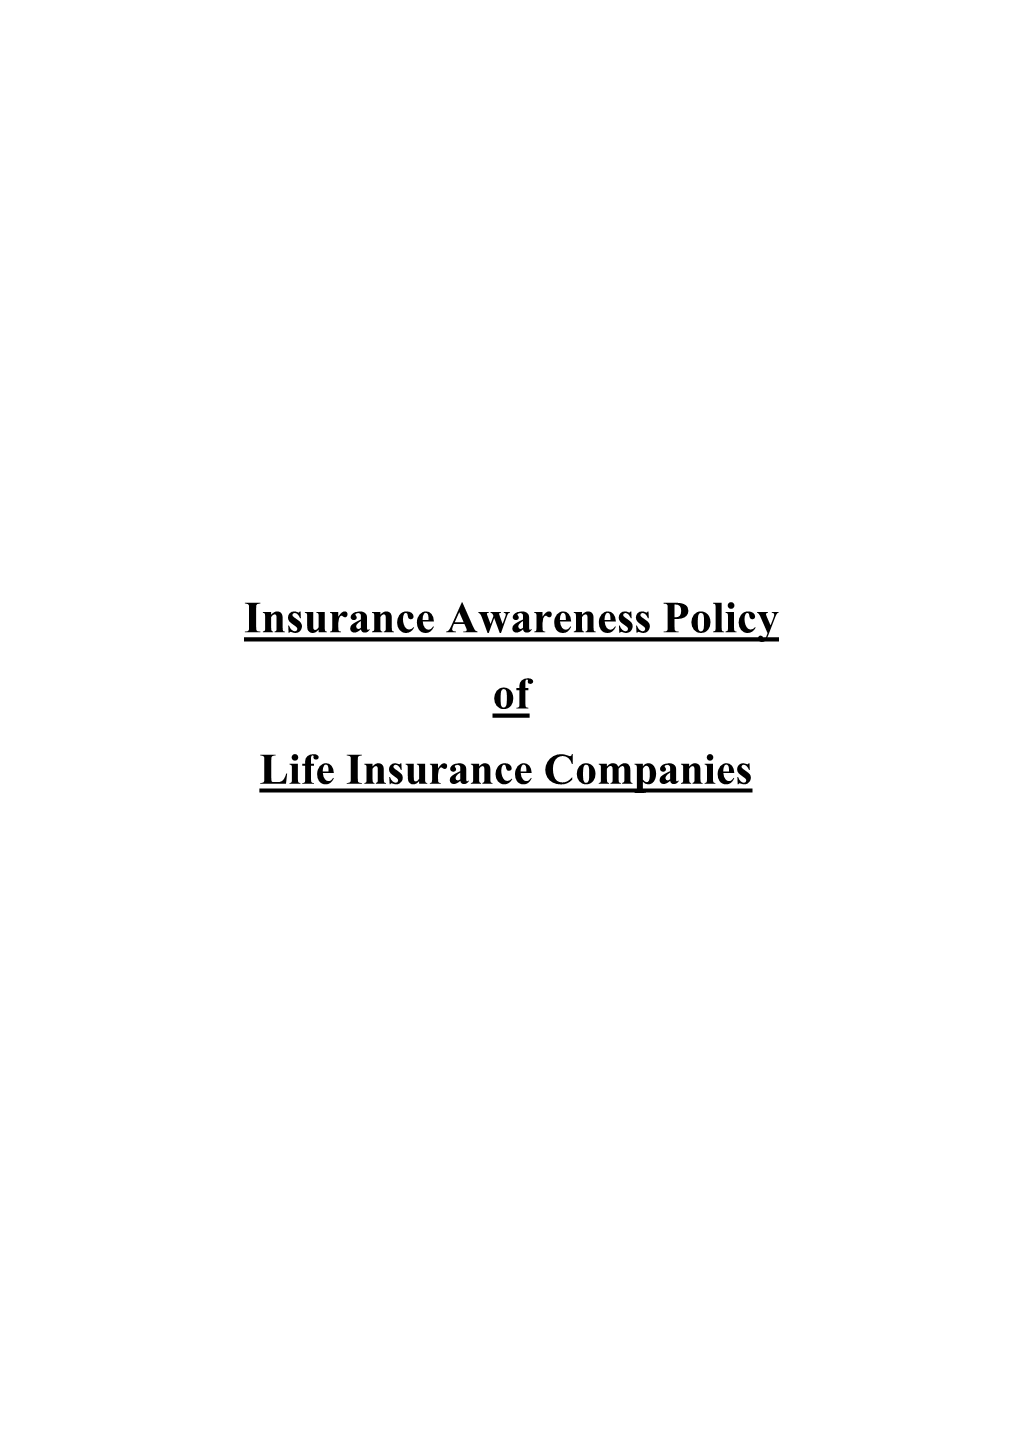 Insurance Awareness Policy of Life Insurance Companies